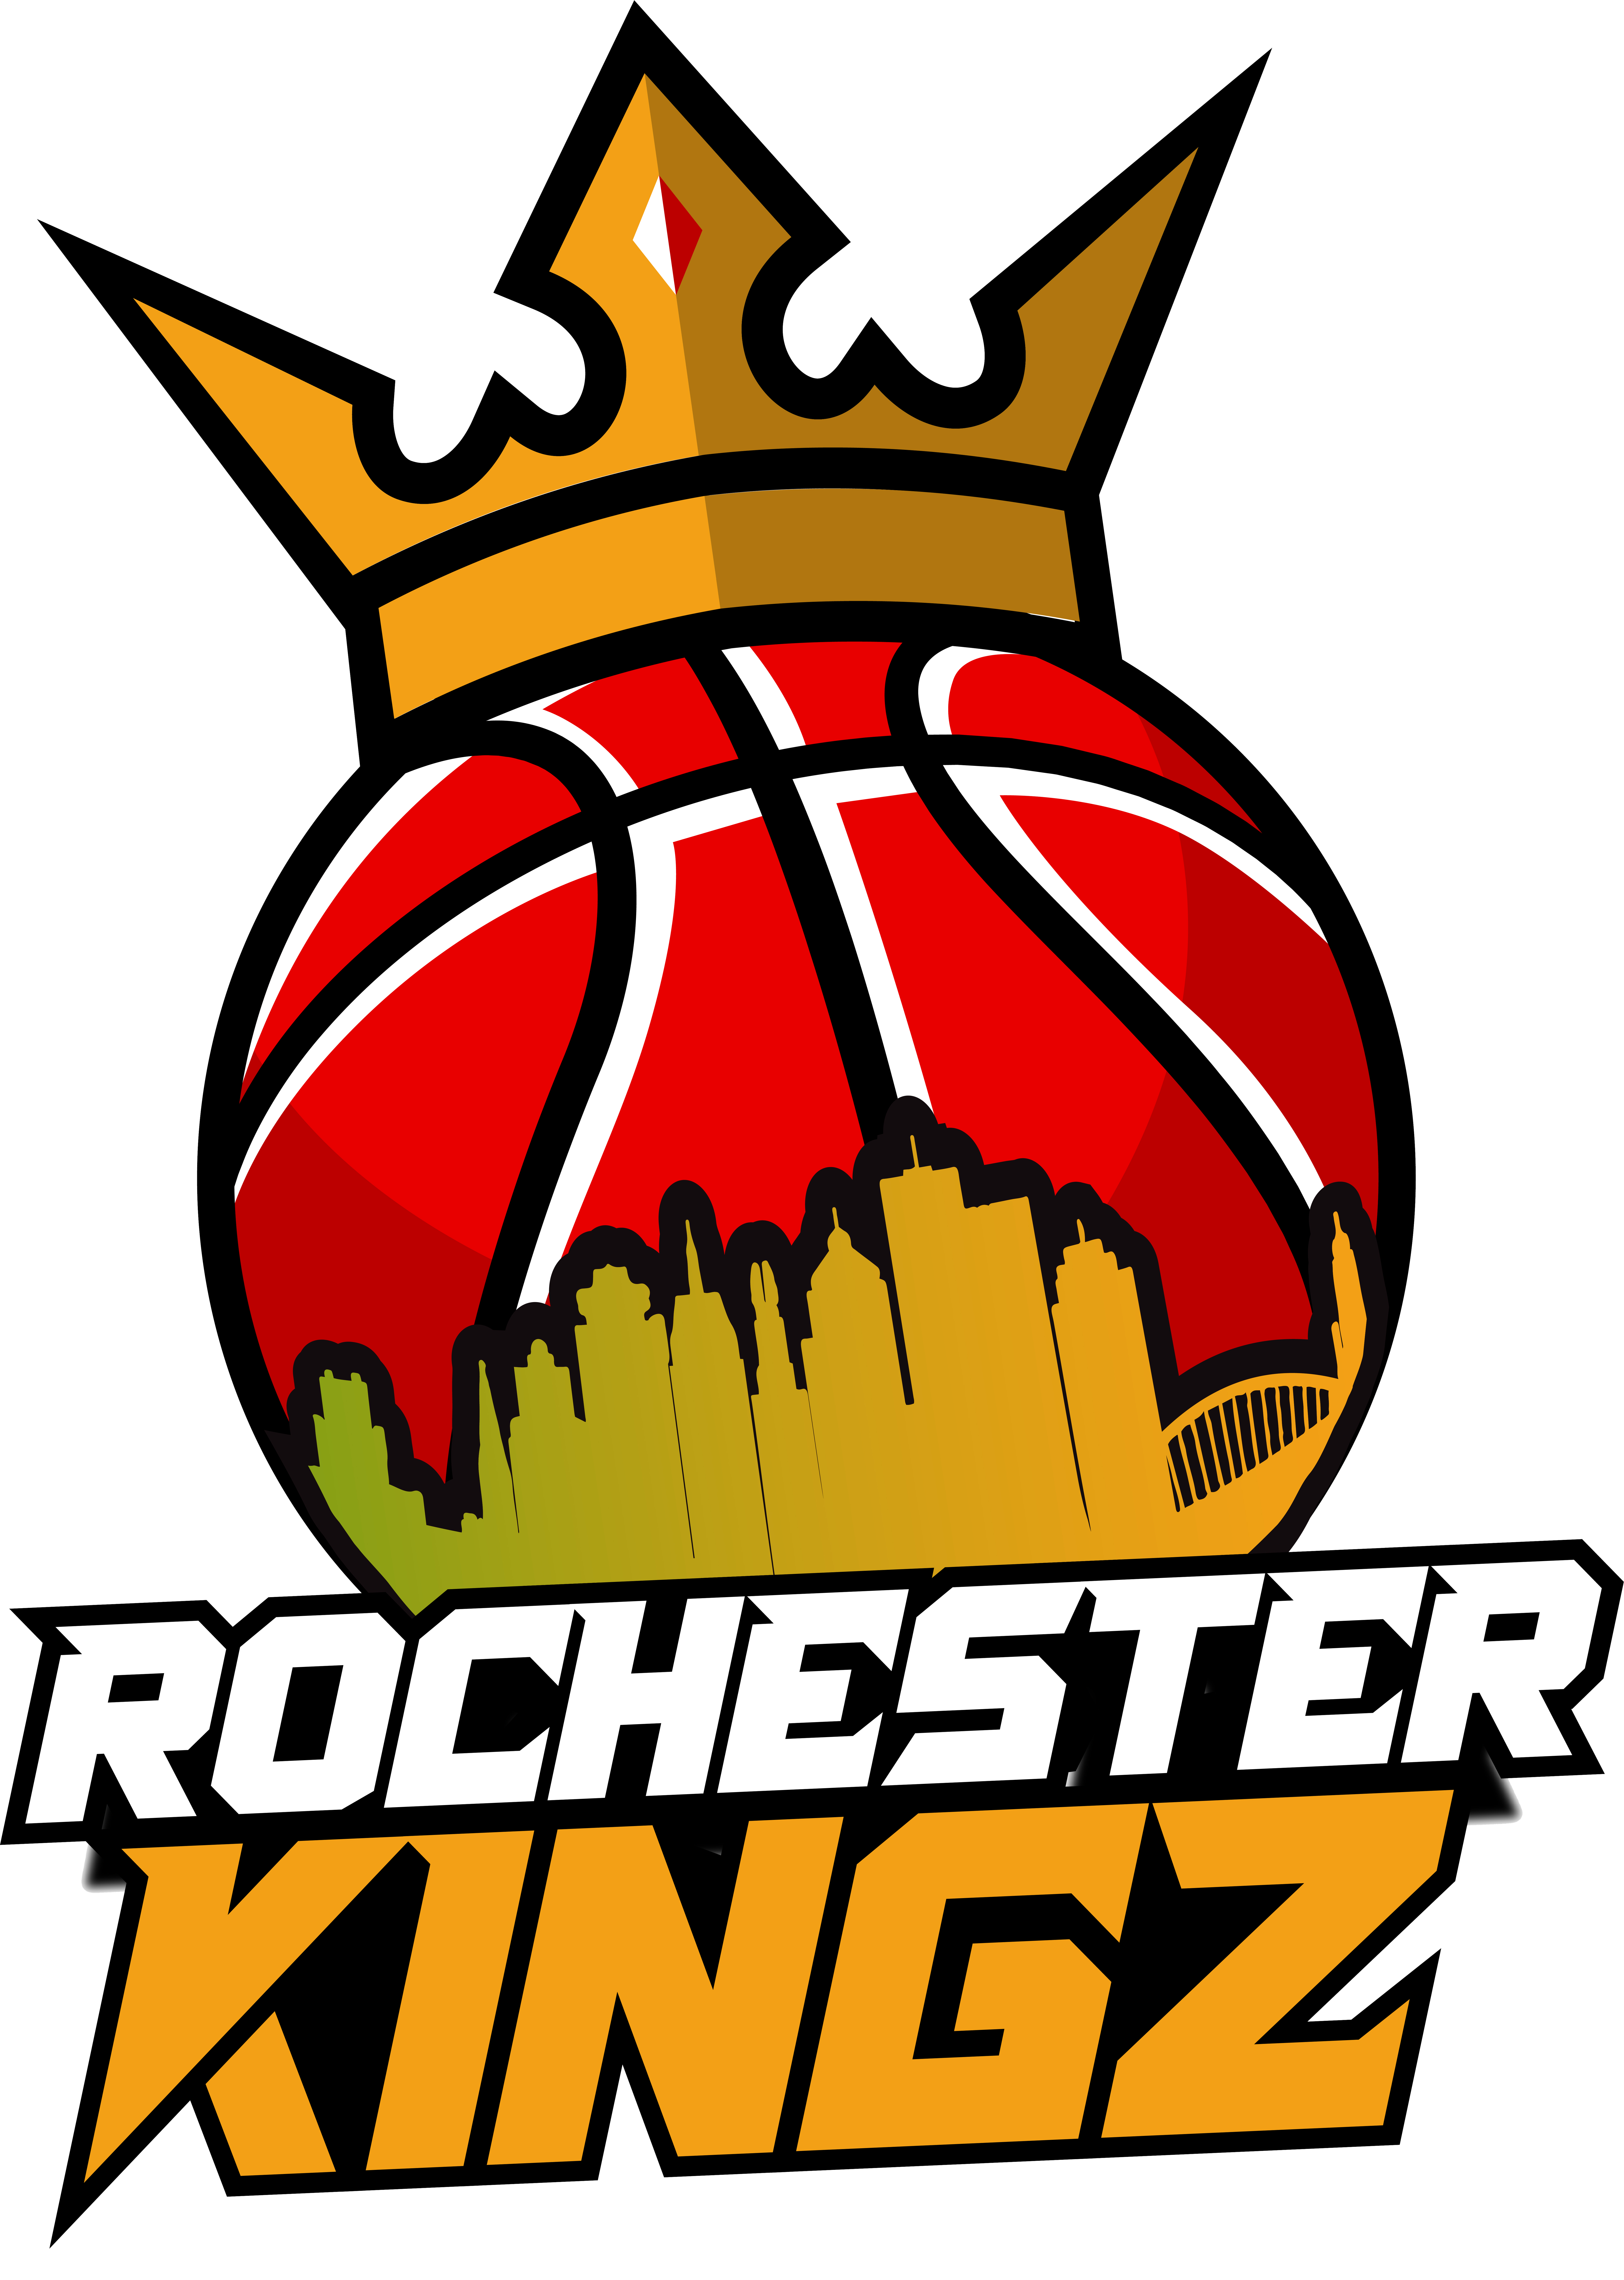 Rochester Kingz